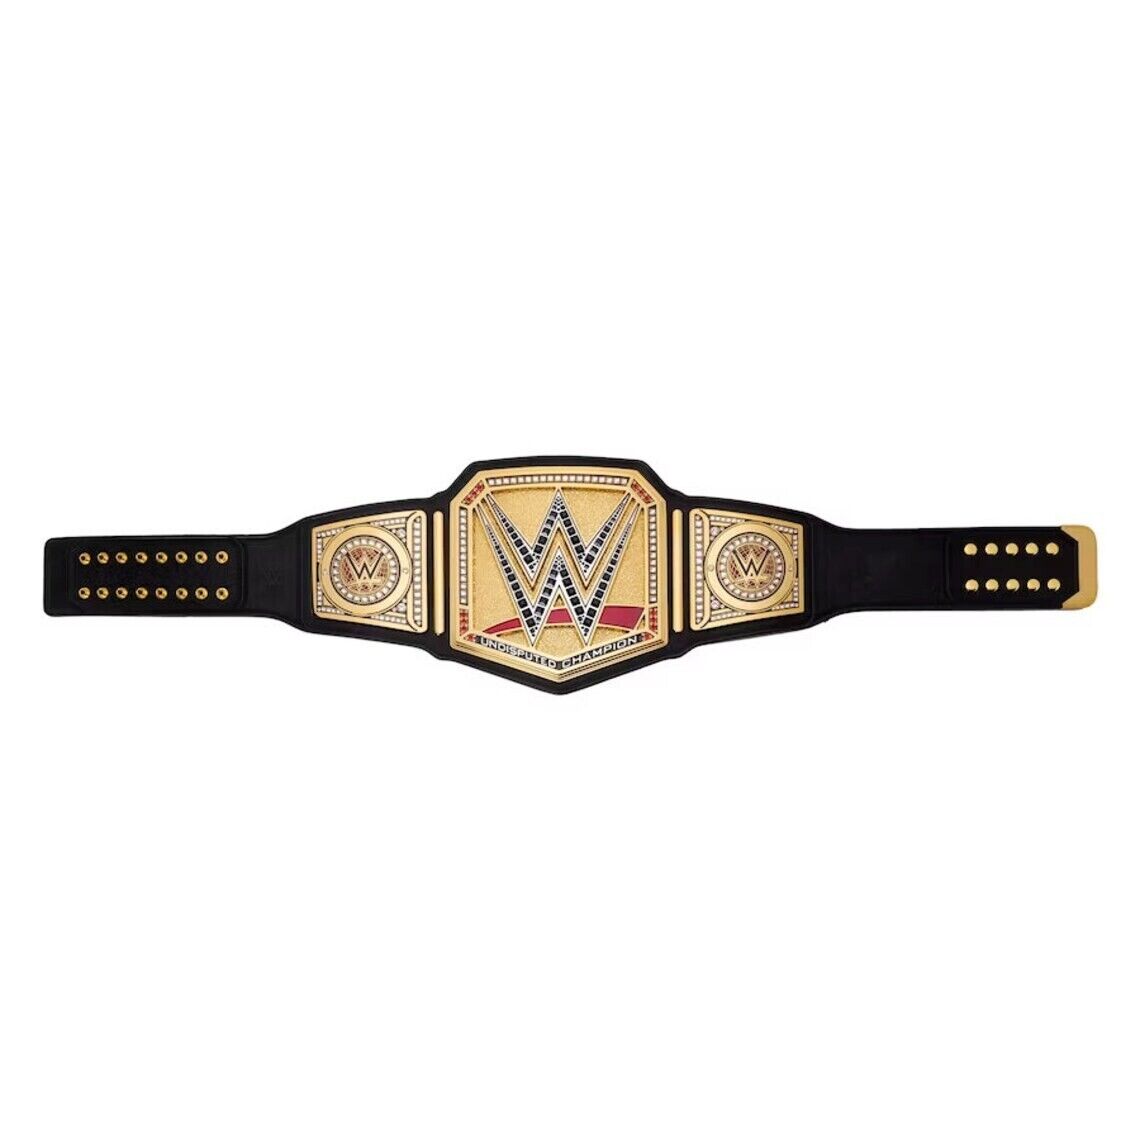 Undisputed Universal Championship Title Belt Replica World Heavyweight Wrestling Belt Adult Size